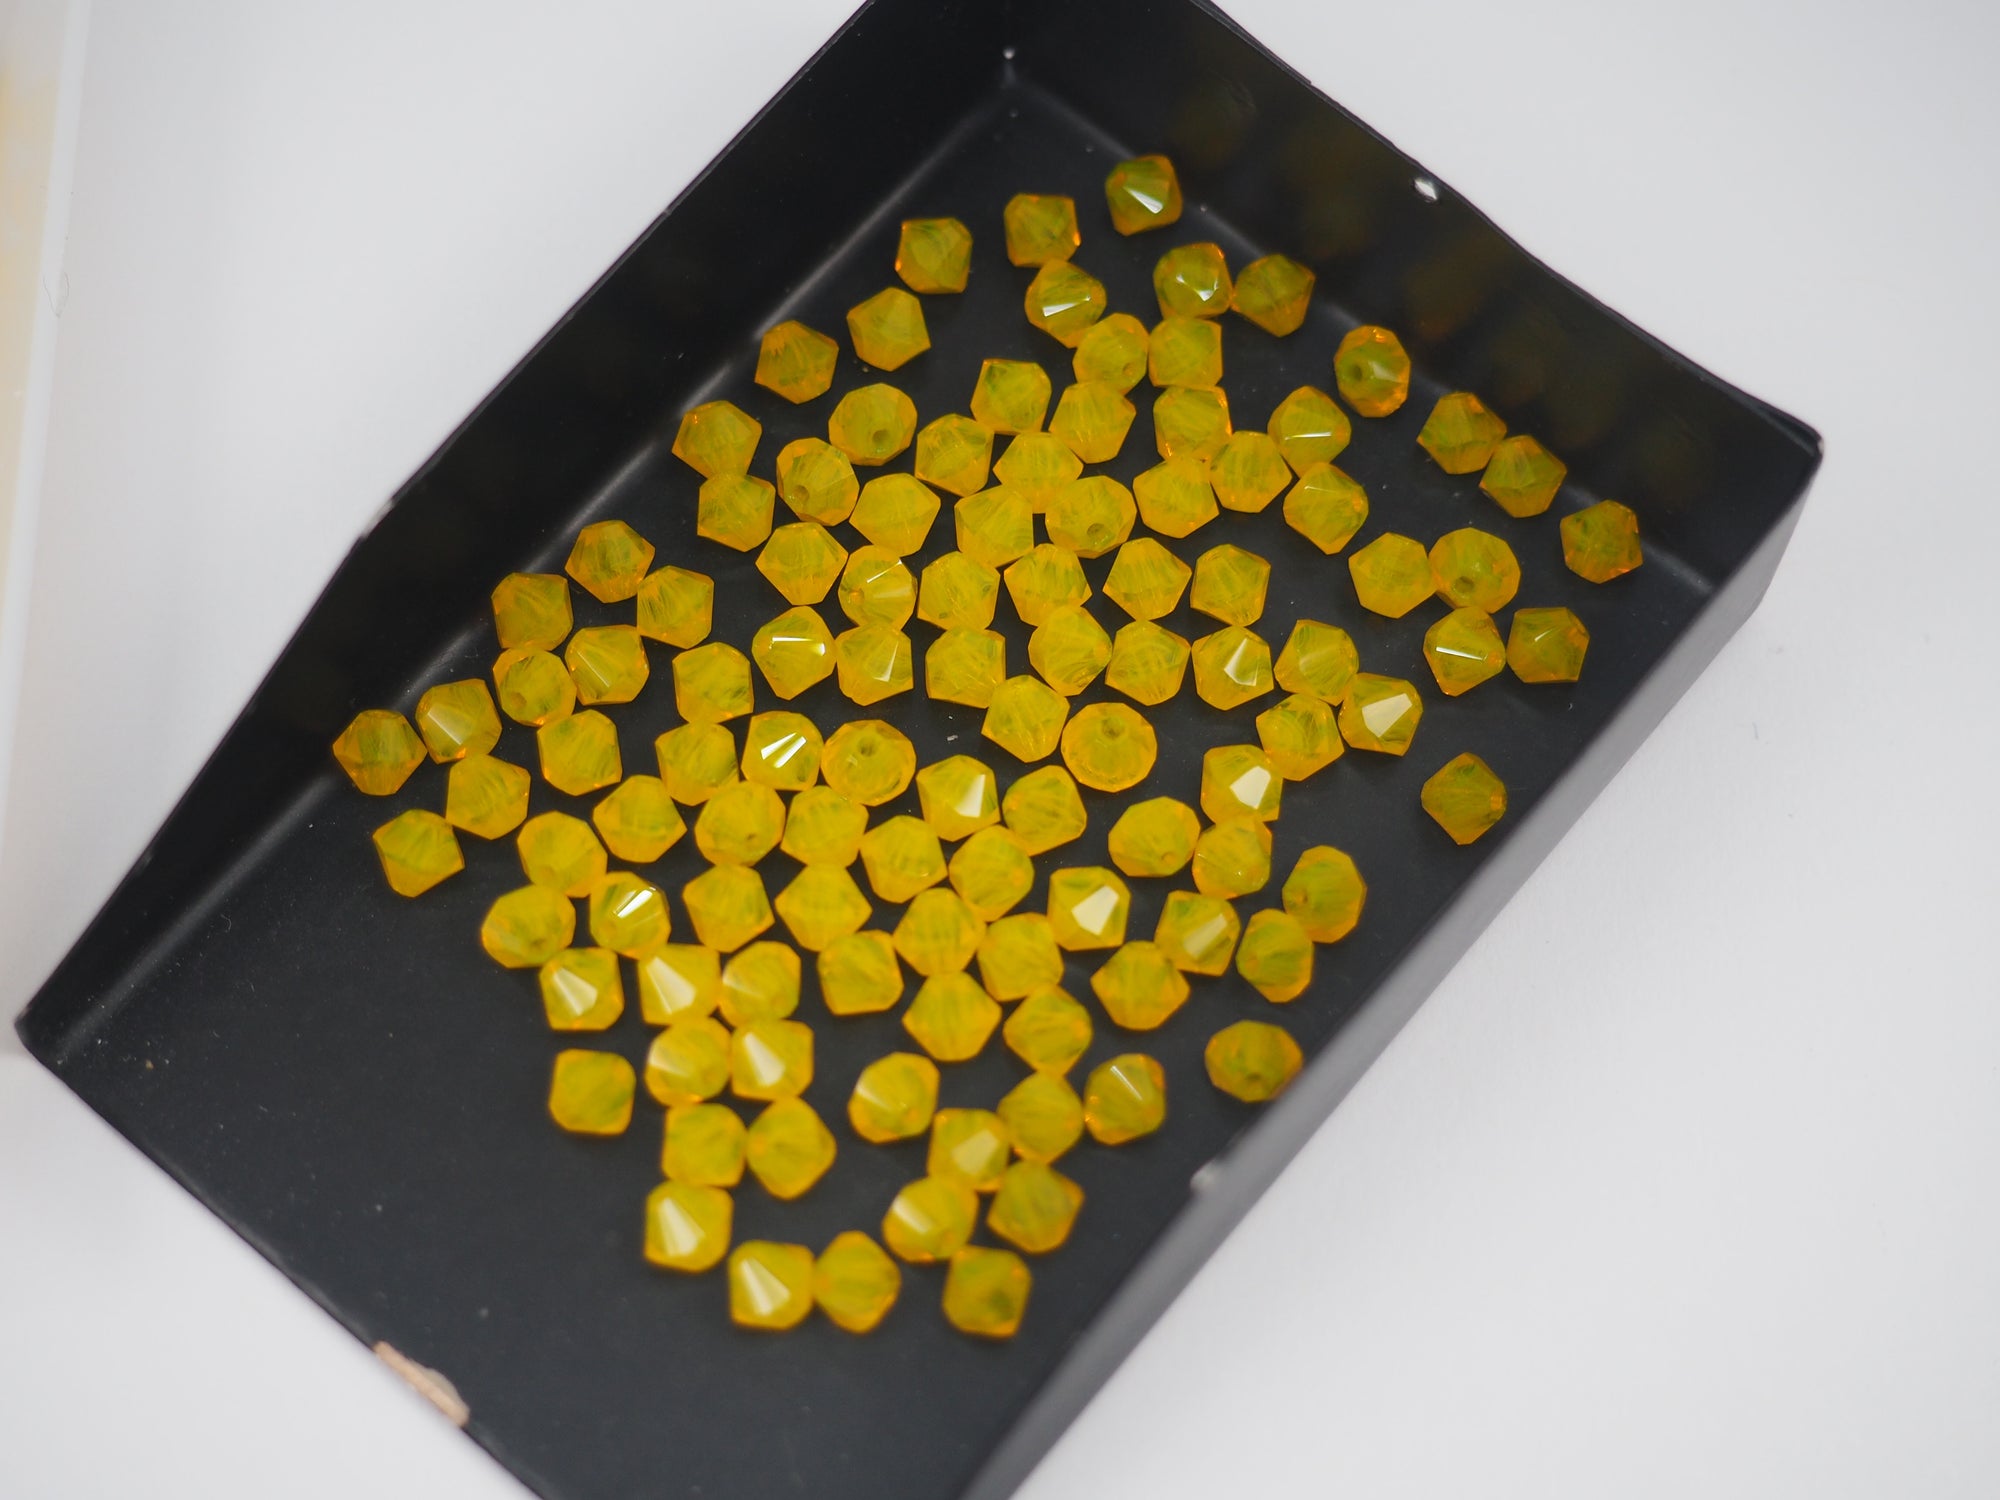 Citrine Opal, Czech Glass Beads, Machine Cut Bicones (MC Rondell, Diamond Shape), rich yellow OPAL crystals